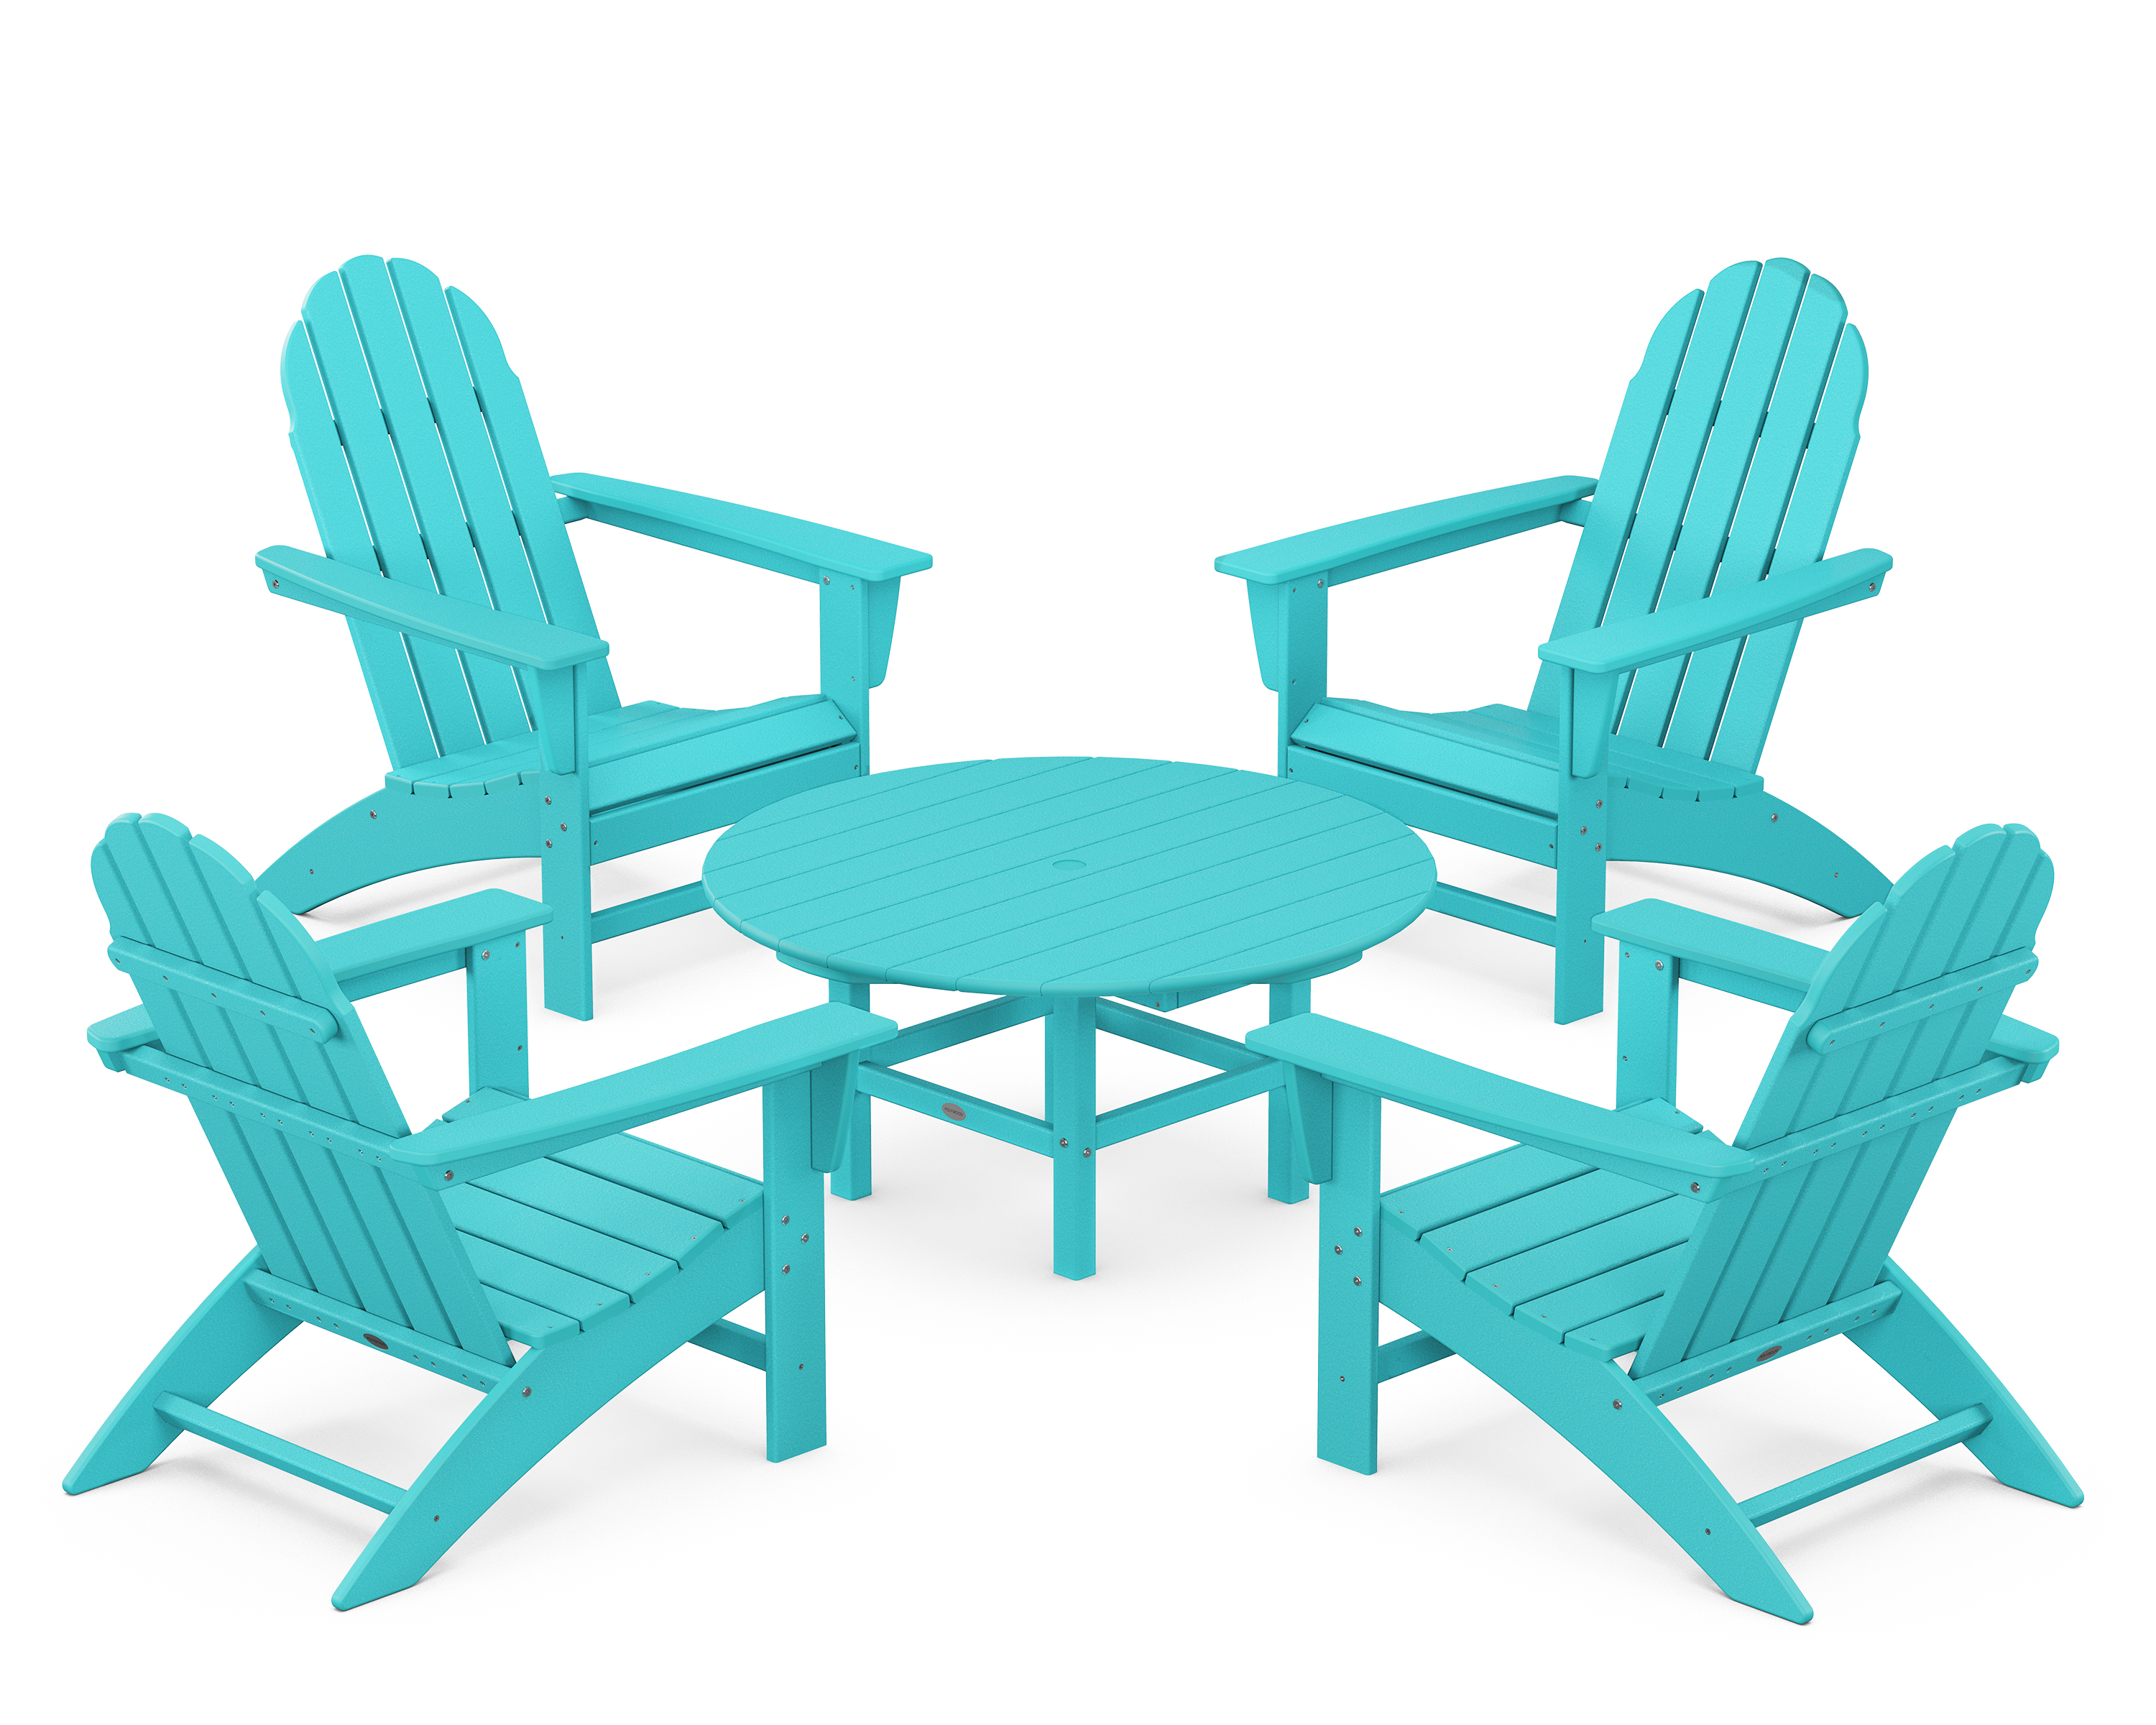 POLYWOOD Vineyard 5-Piece Adirondack Chair Conversation Set in Aruba - image 1 of 1